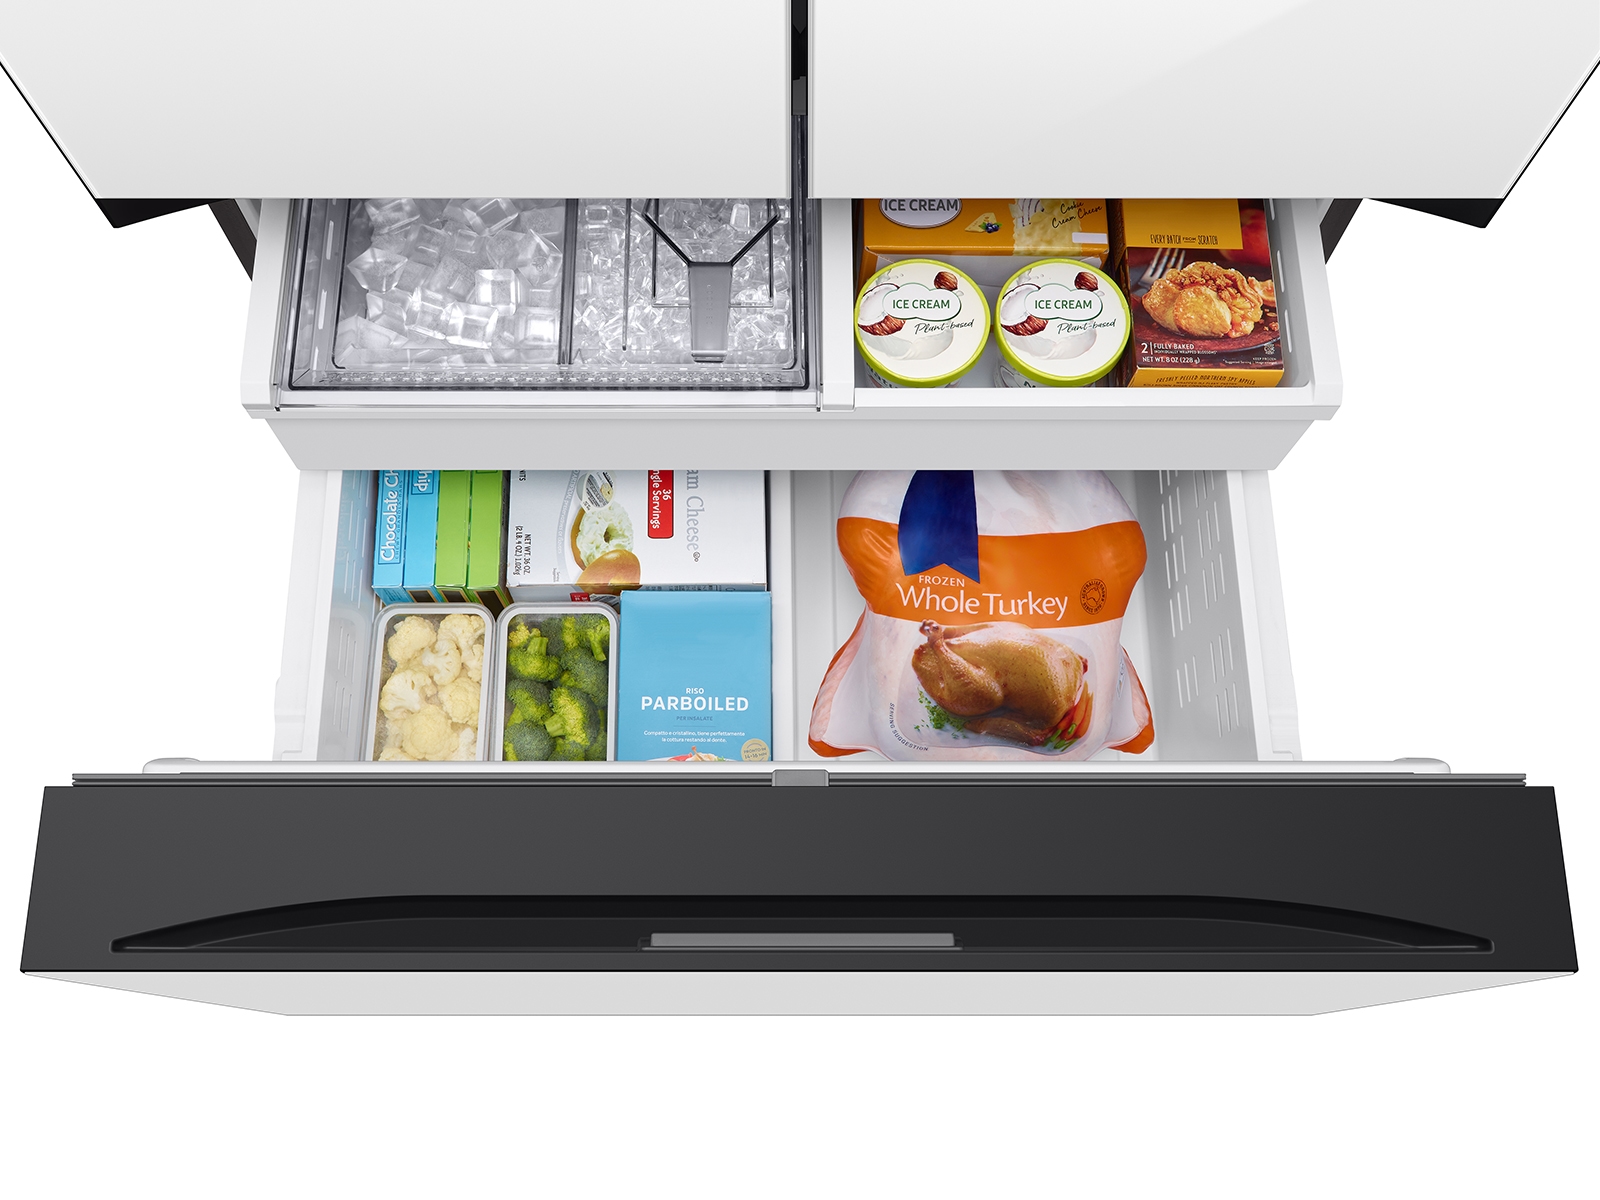 Samsung - Bespoke 30 Cu. ft 3-Door French Door Refrigerator with Autofill Water Pitcher - White Glass